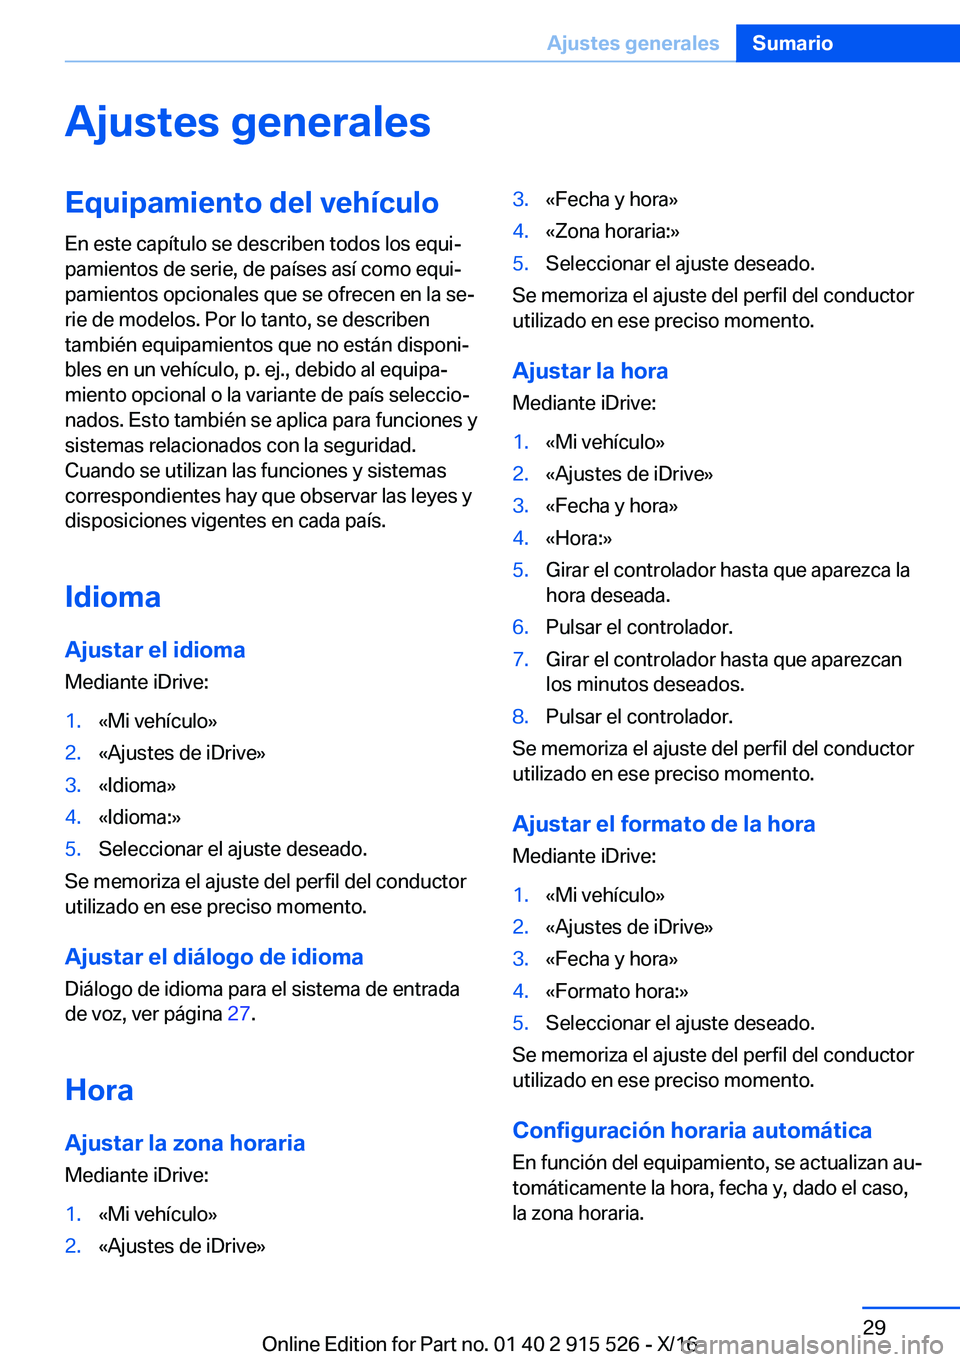 BMW X5 2017  Manuales de Empleo (in Spanish) �A�j�u�s�t�e�s��g�e�n�e�r�a�l�e�s�E�q�u�i�p�a�m�i�e�n�t�o��d�e�l��v�e�h�